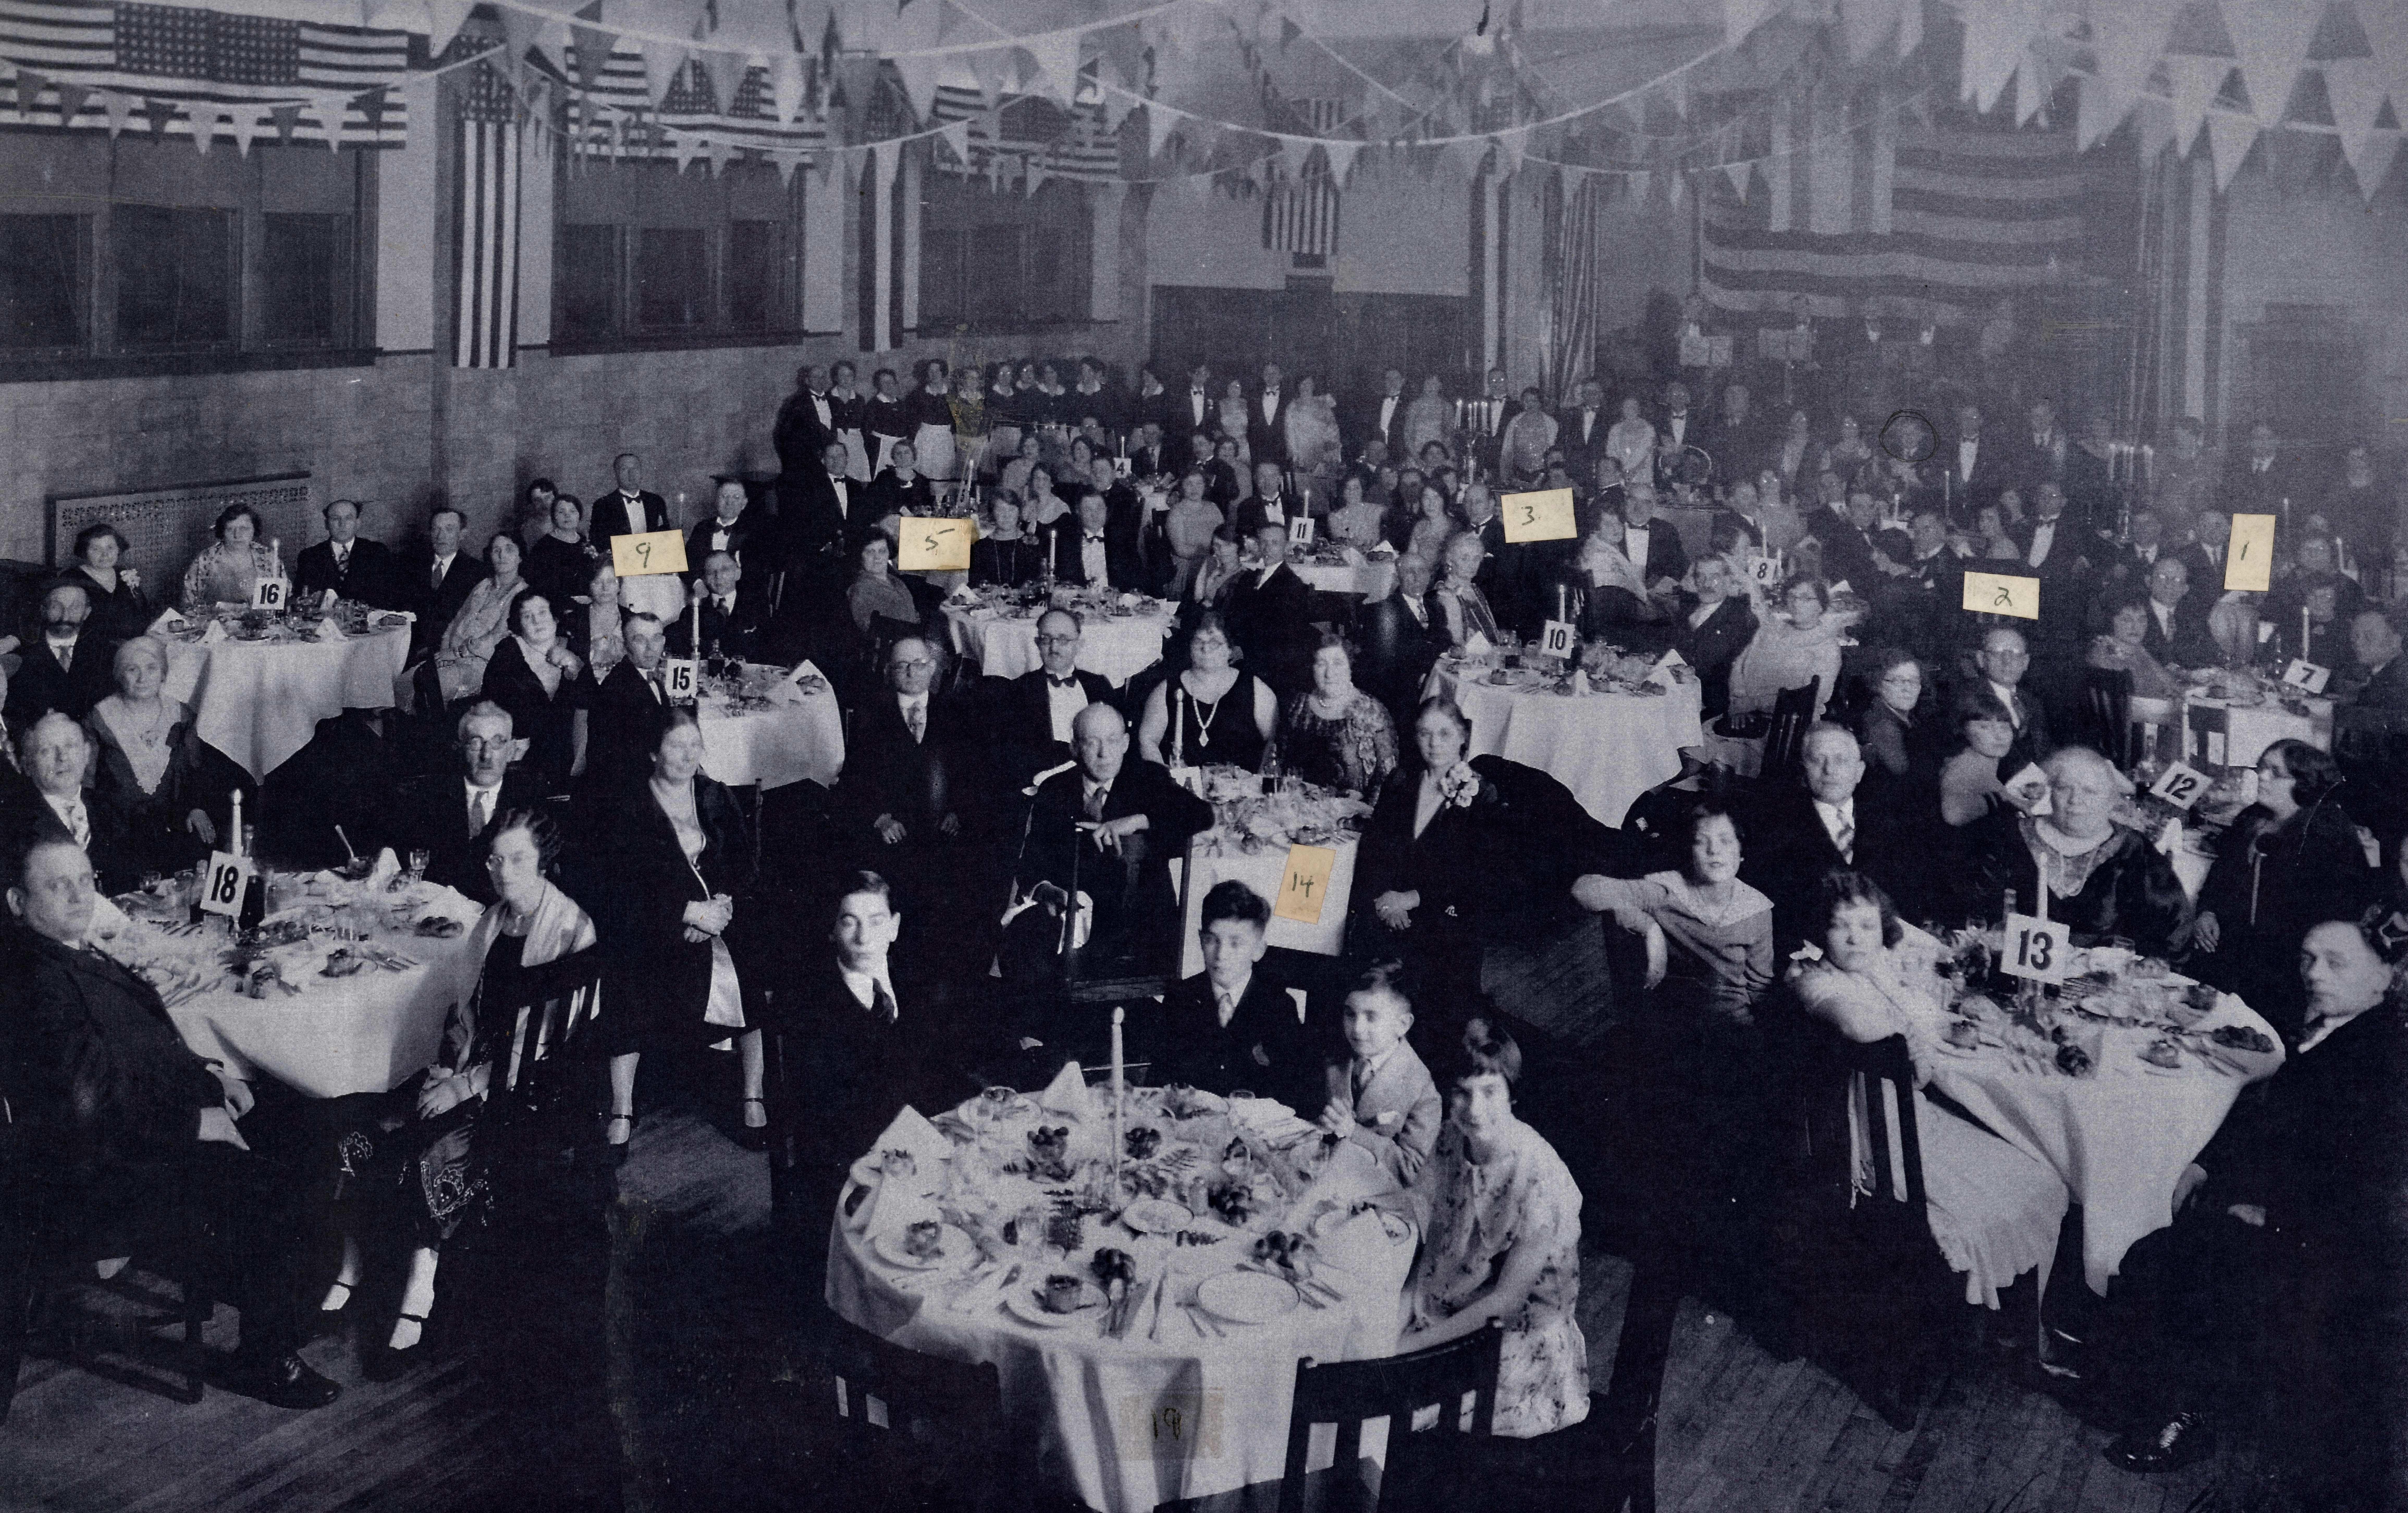 Ustingrader Verein, Banquet, 1940s